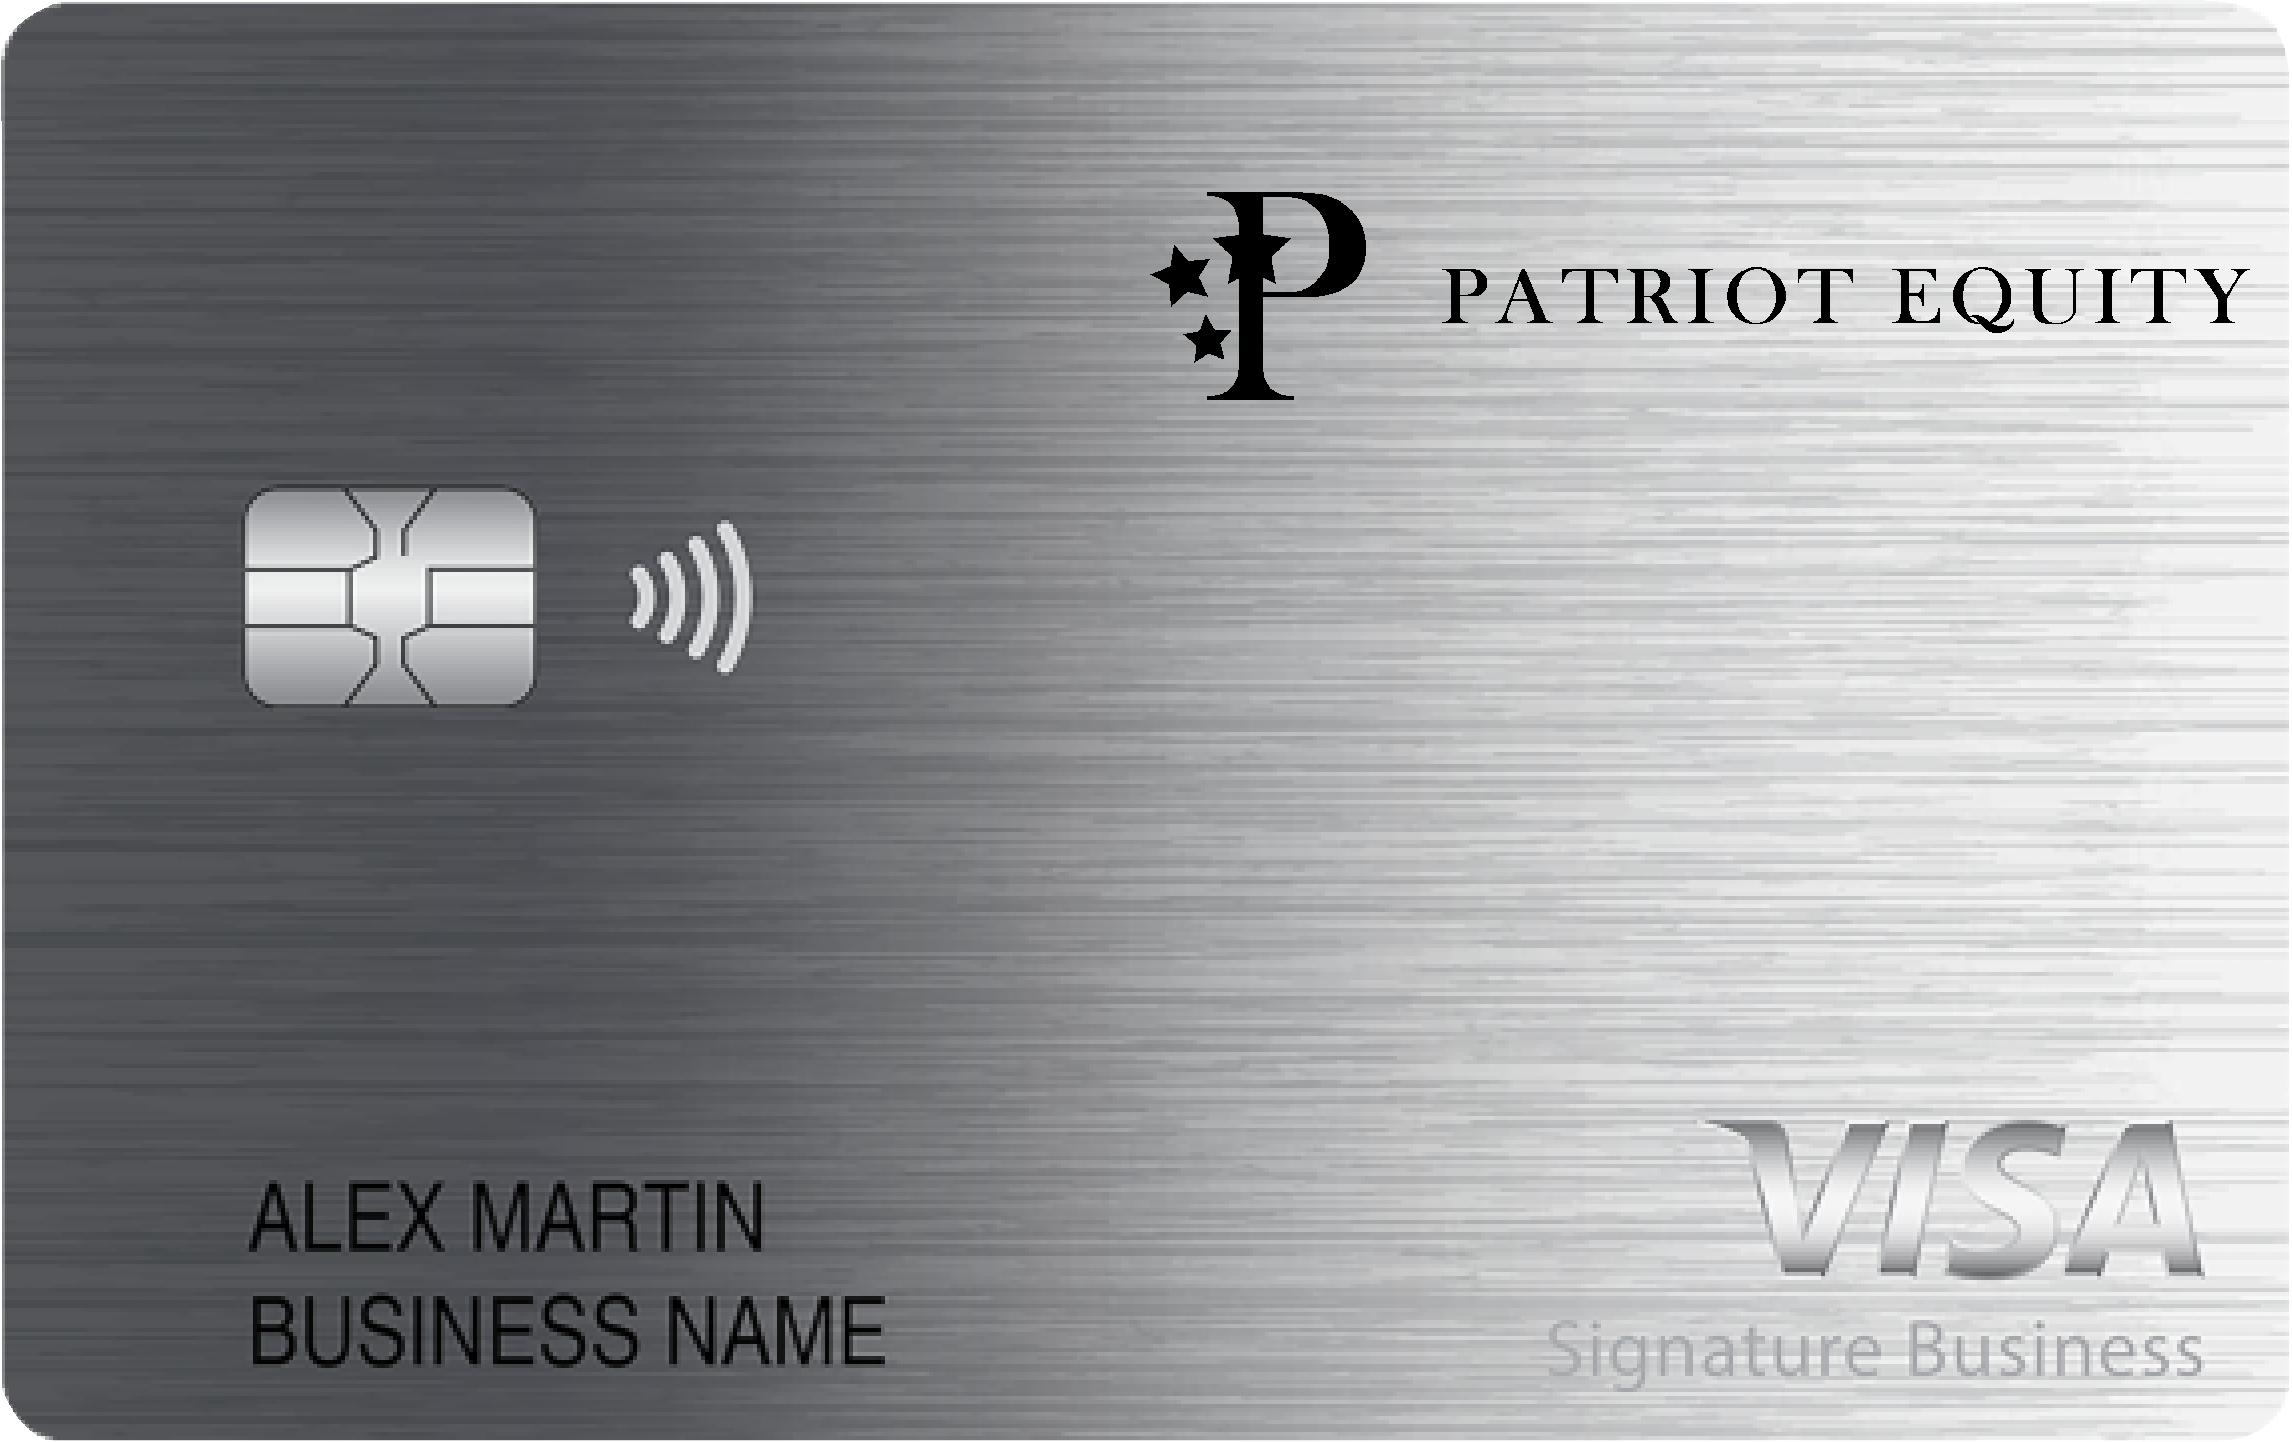 Patriot Equity Credit Union Smart Business Rewards Card